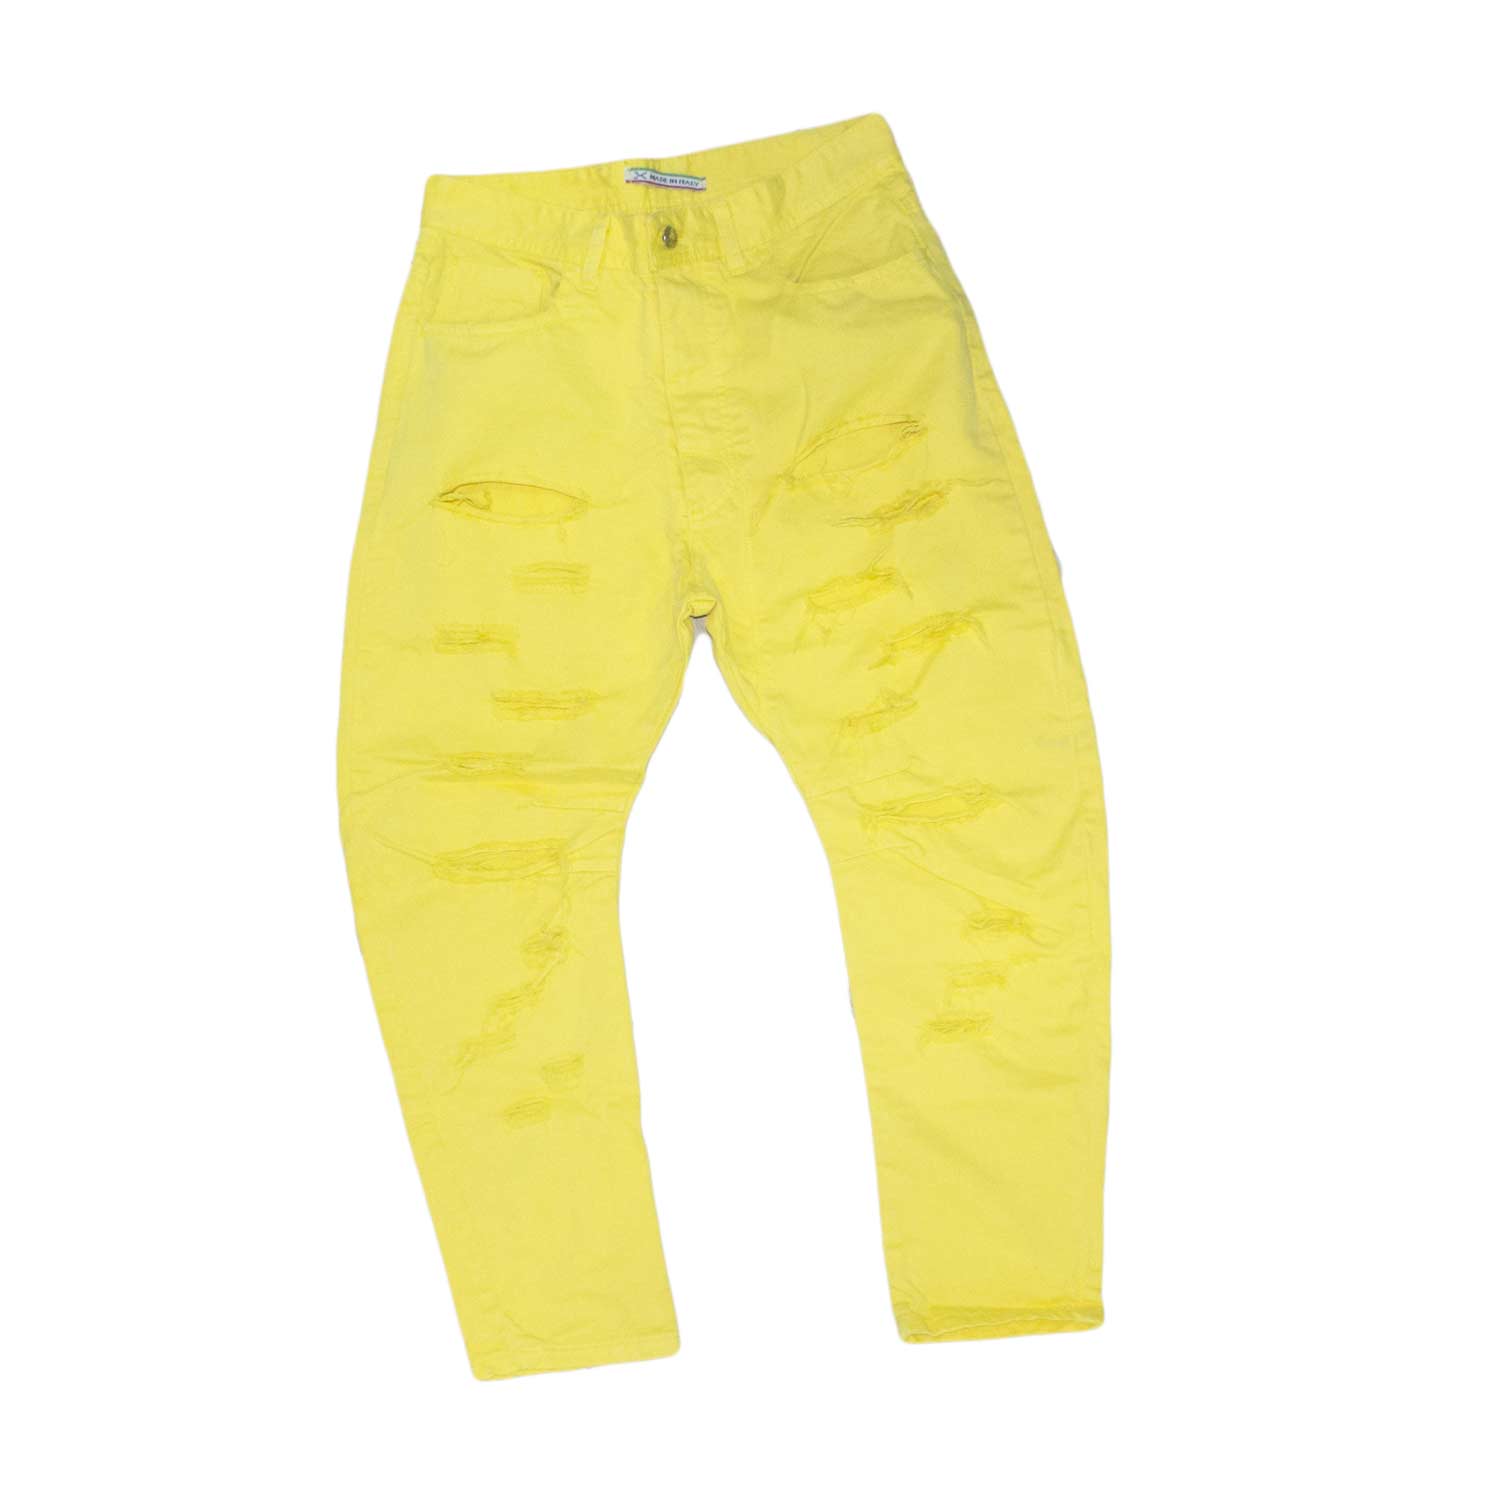 pantaloni uomo man giallo yellow stracci made in italy